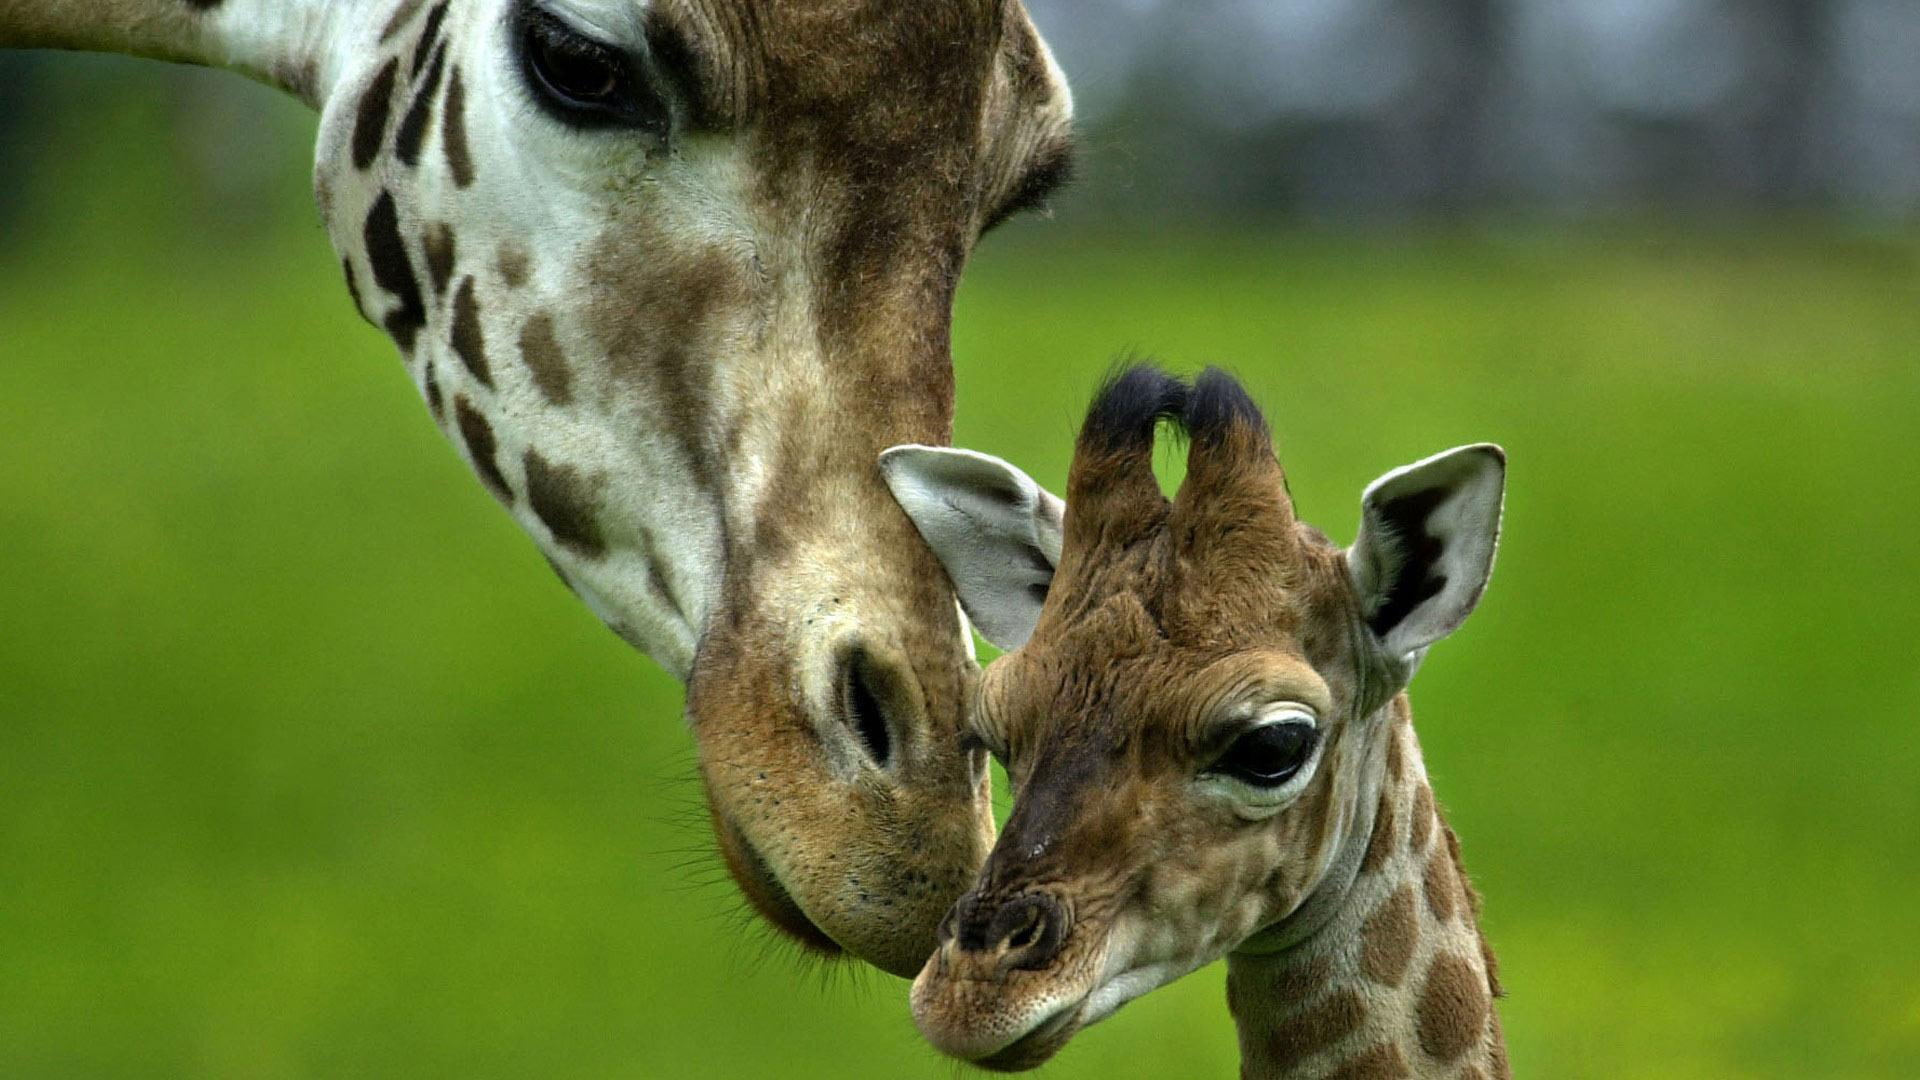 Mother Baby, love, giraffes, animals